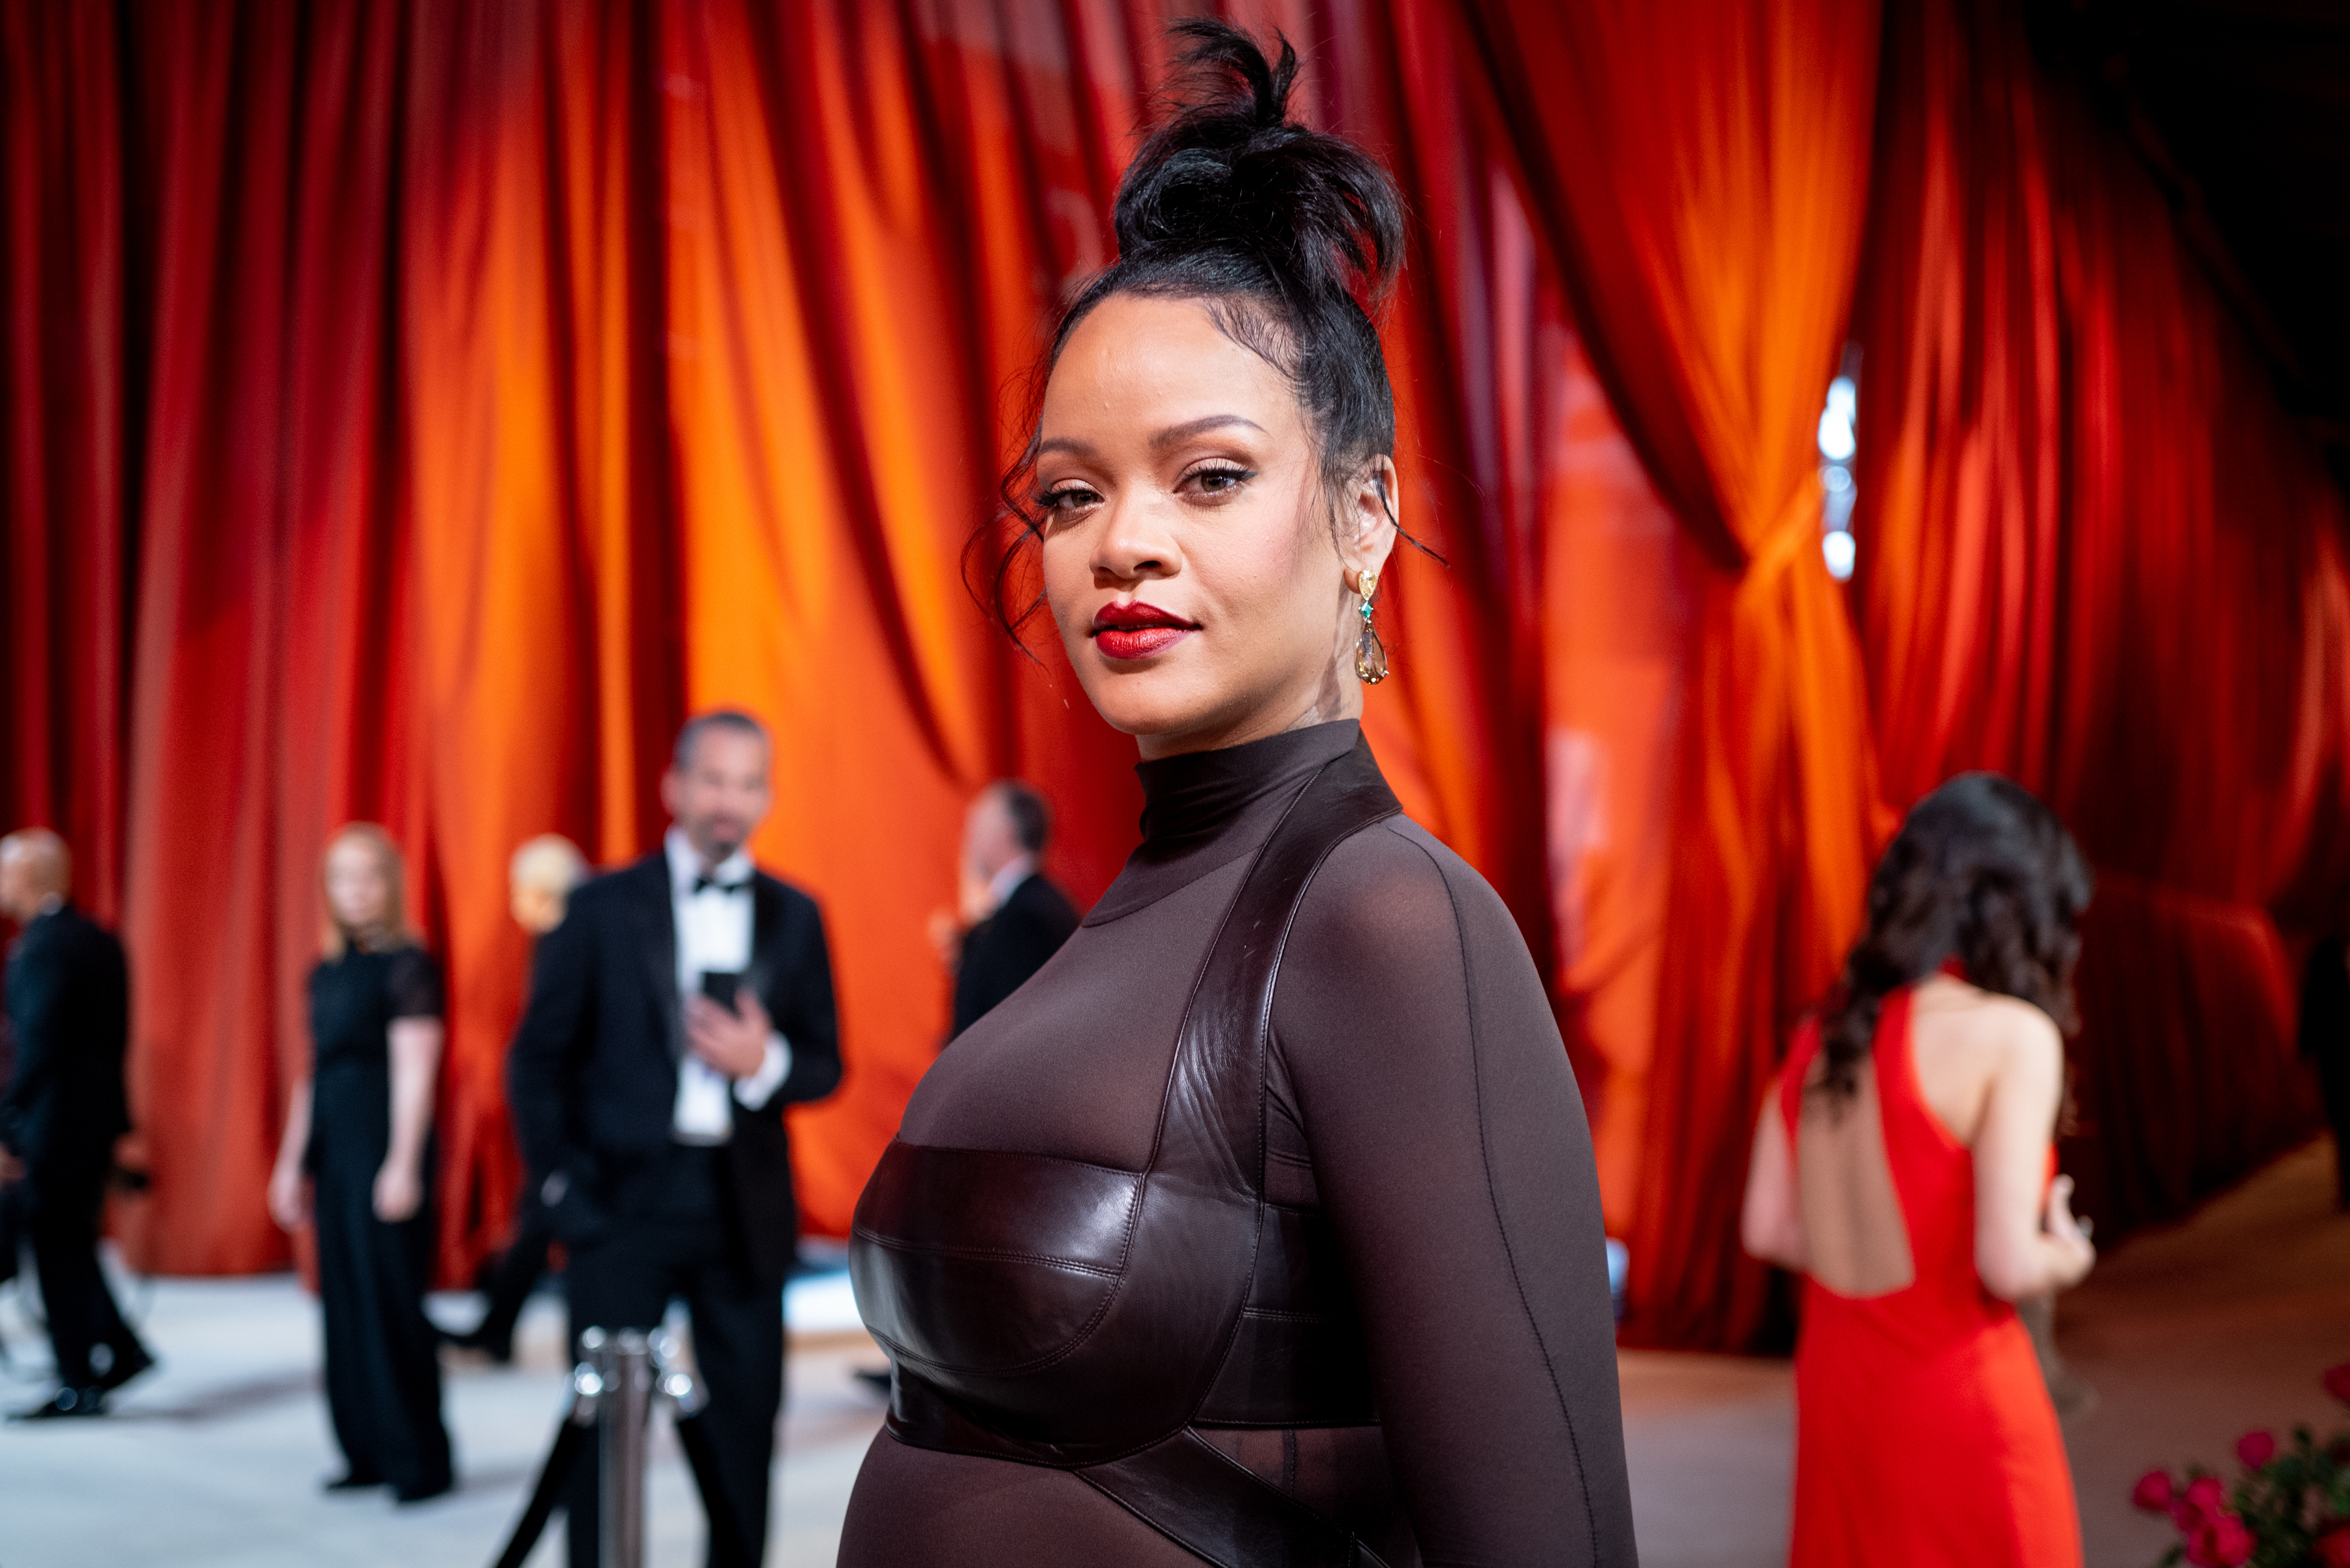 Rihanna in a sheer dress posing at a gala event